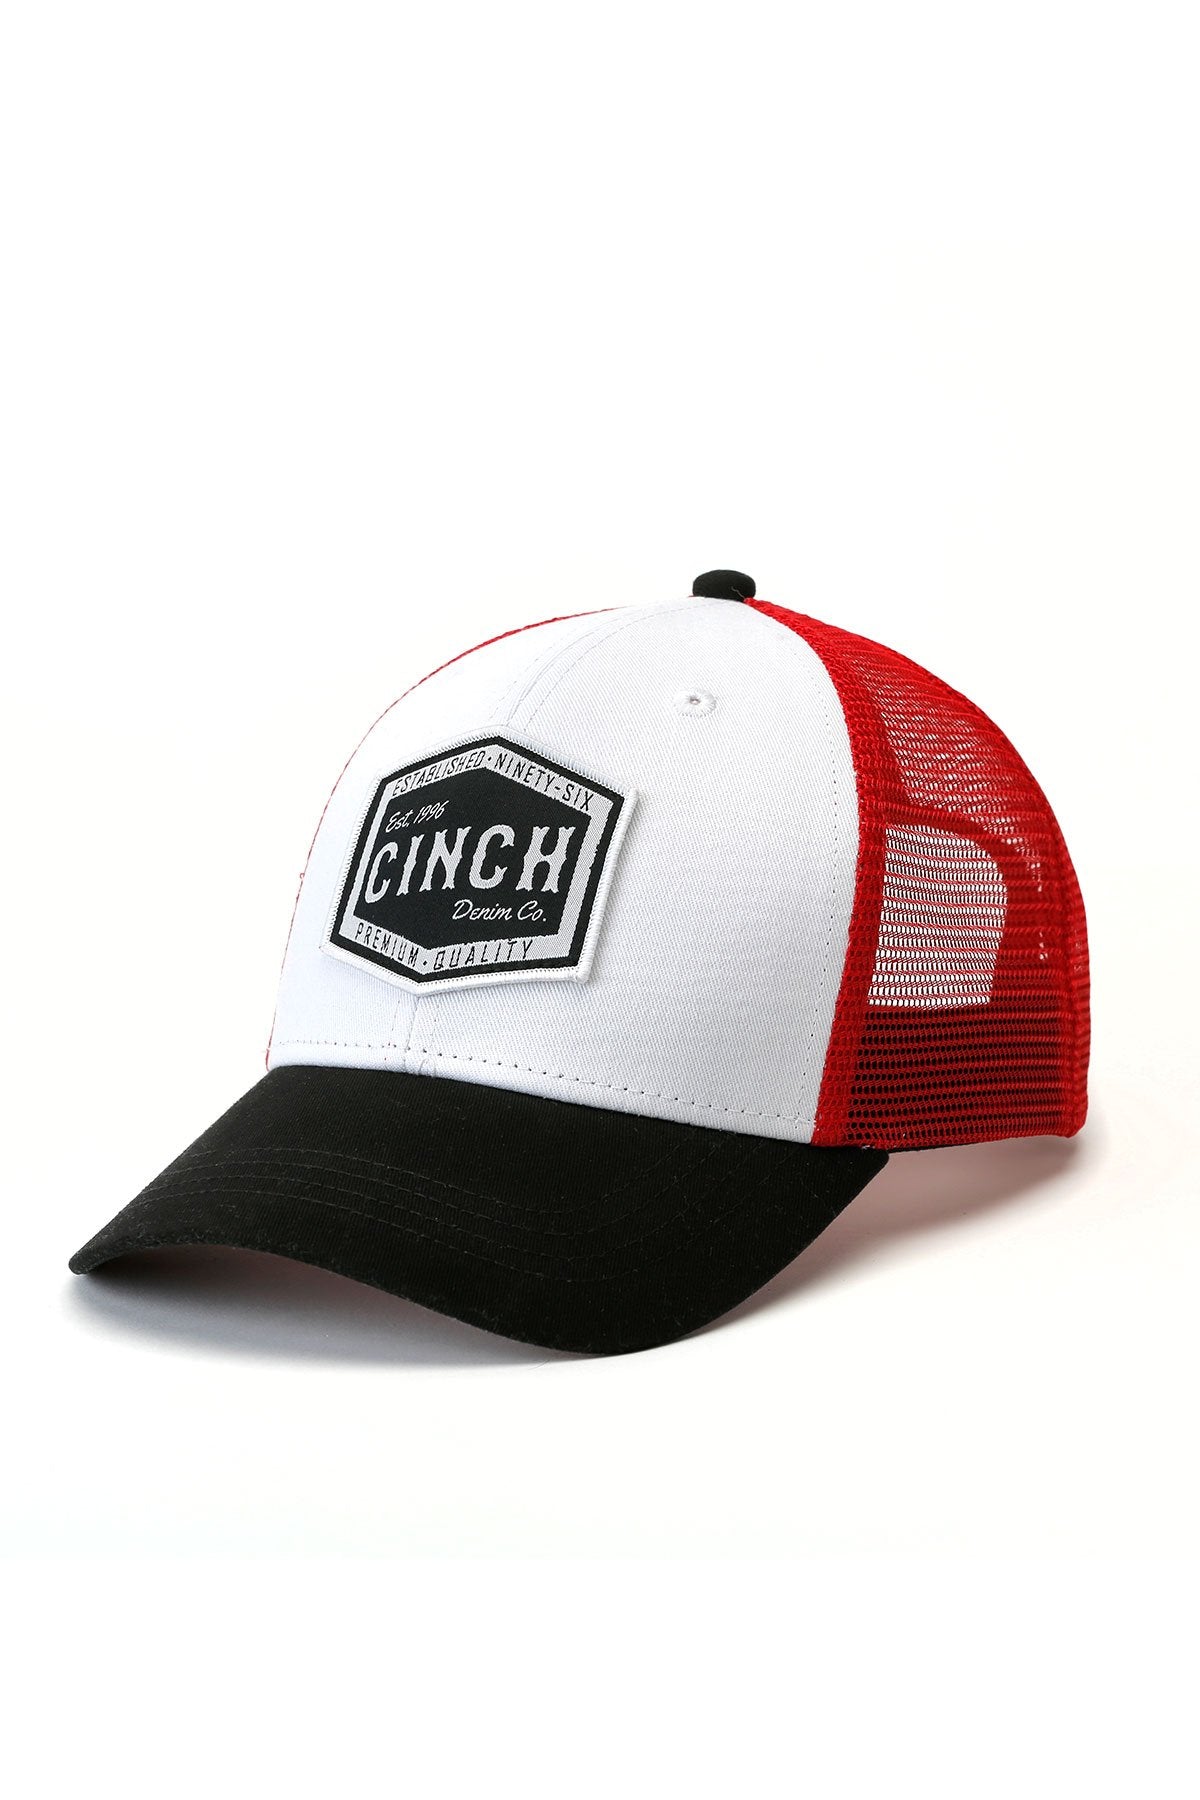 CINCH MEN'S DENIM CO CAP - WHITE / RED / BLACK